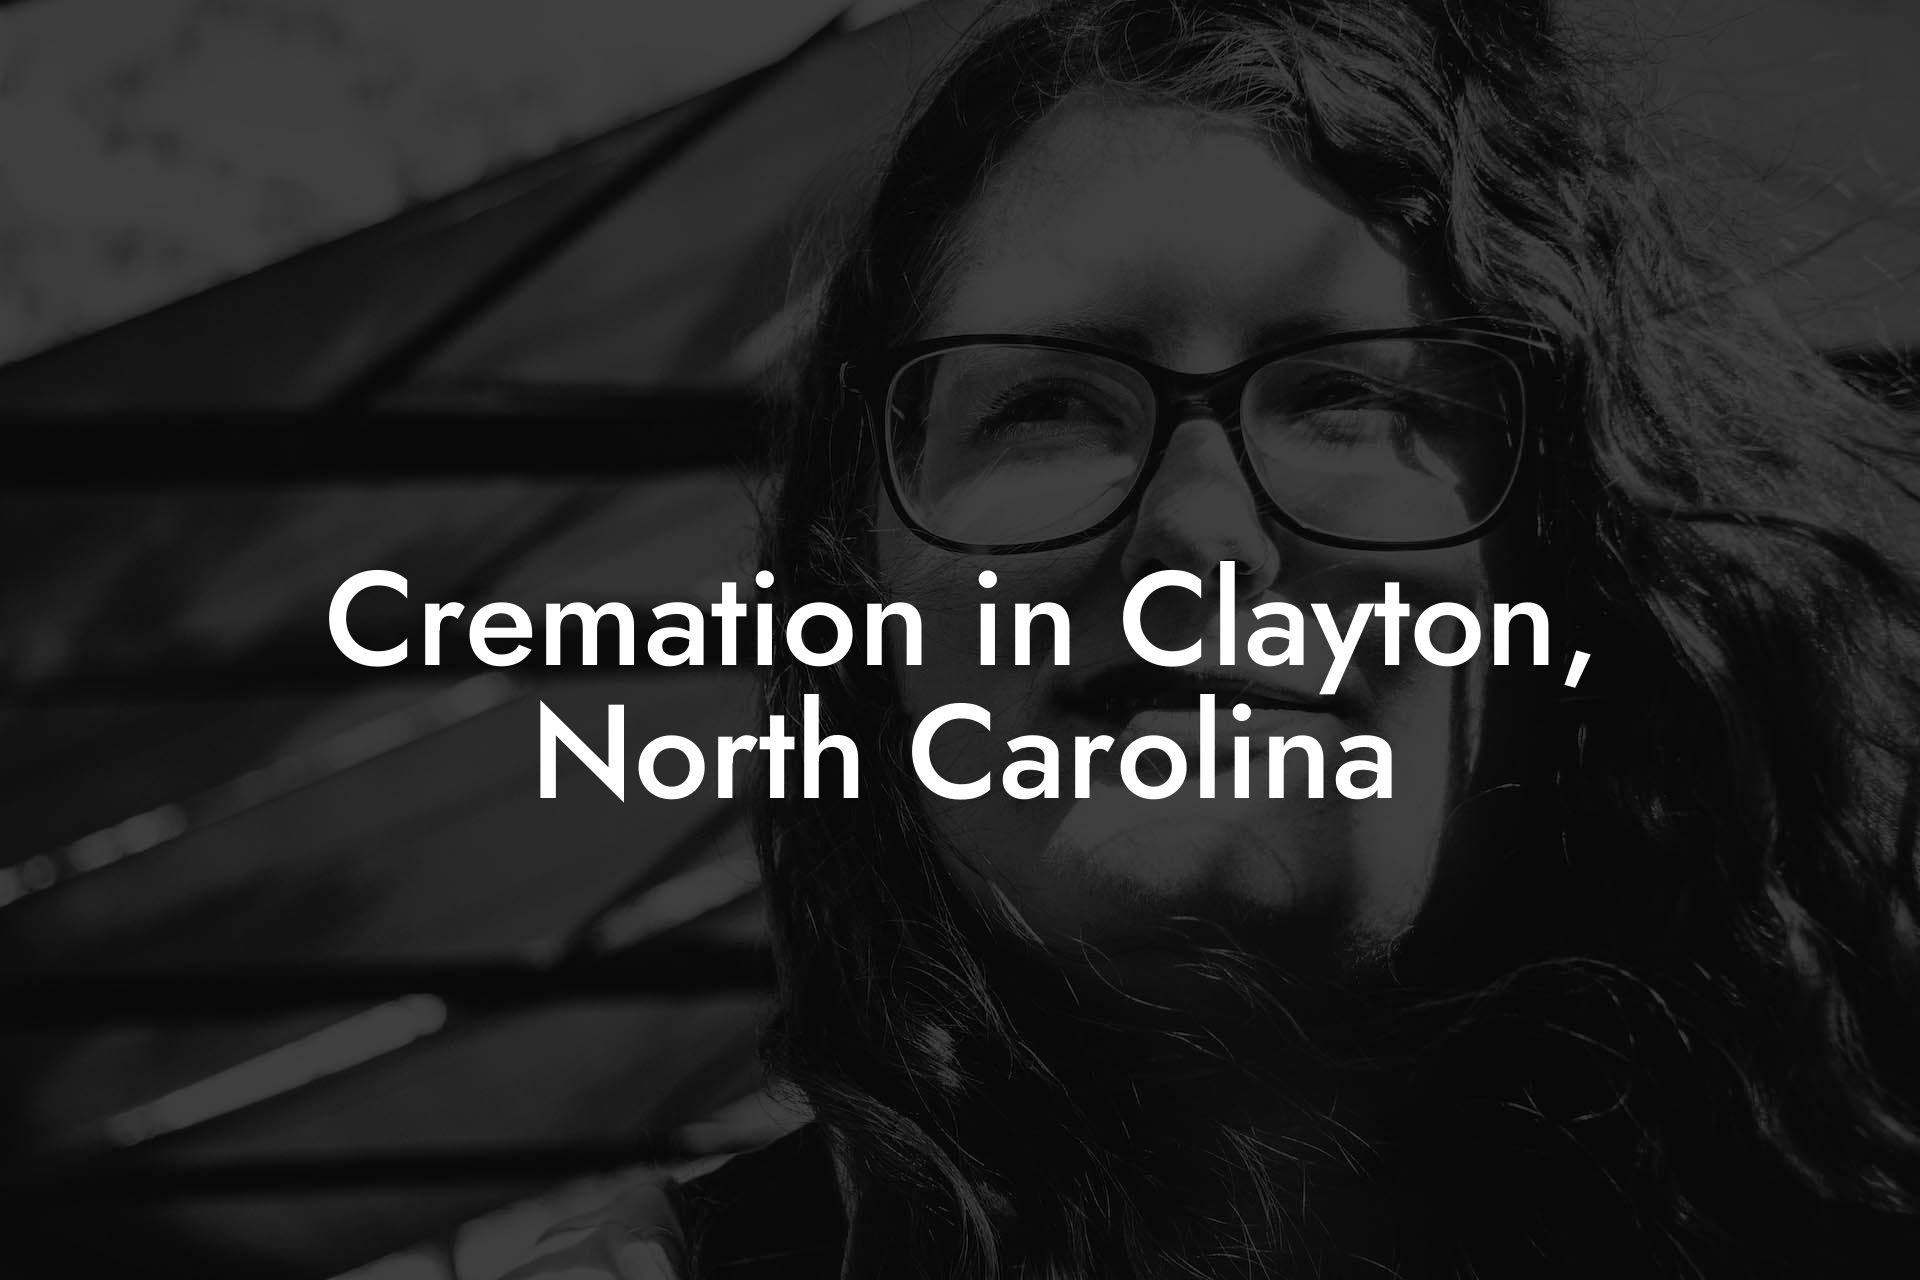 Cremation in Clayton, North Carolina